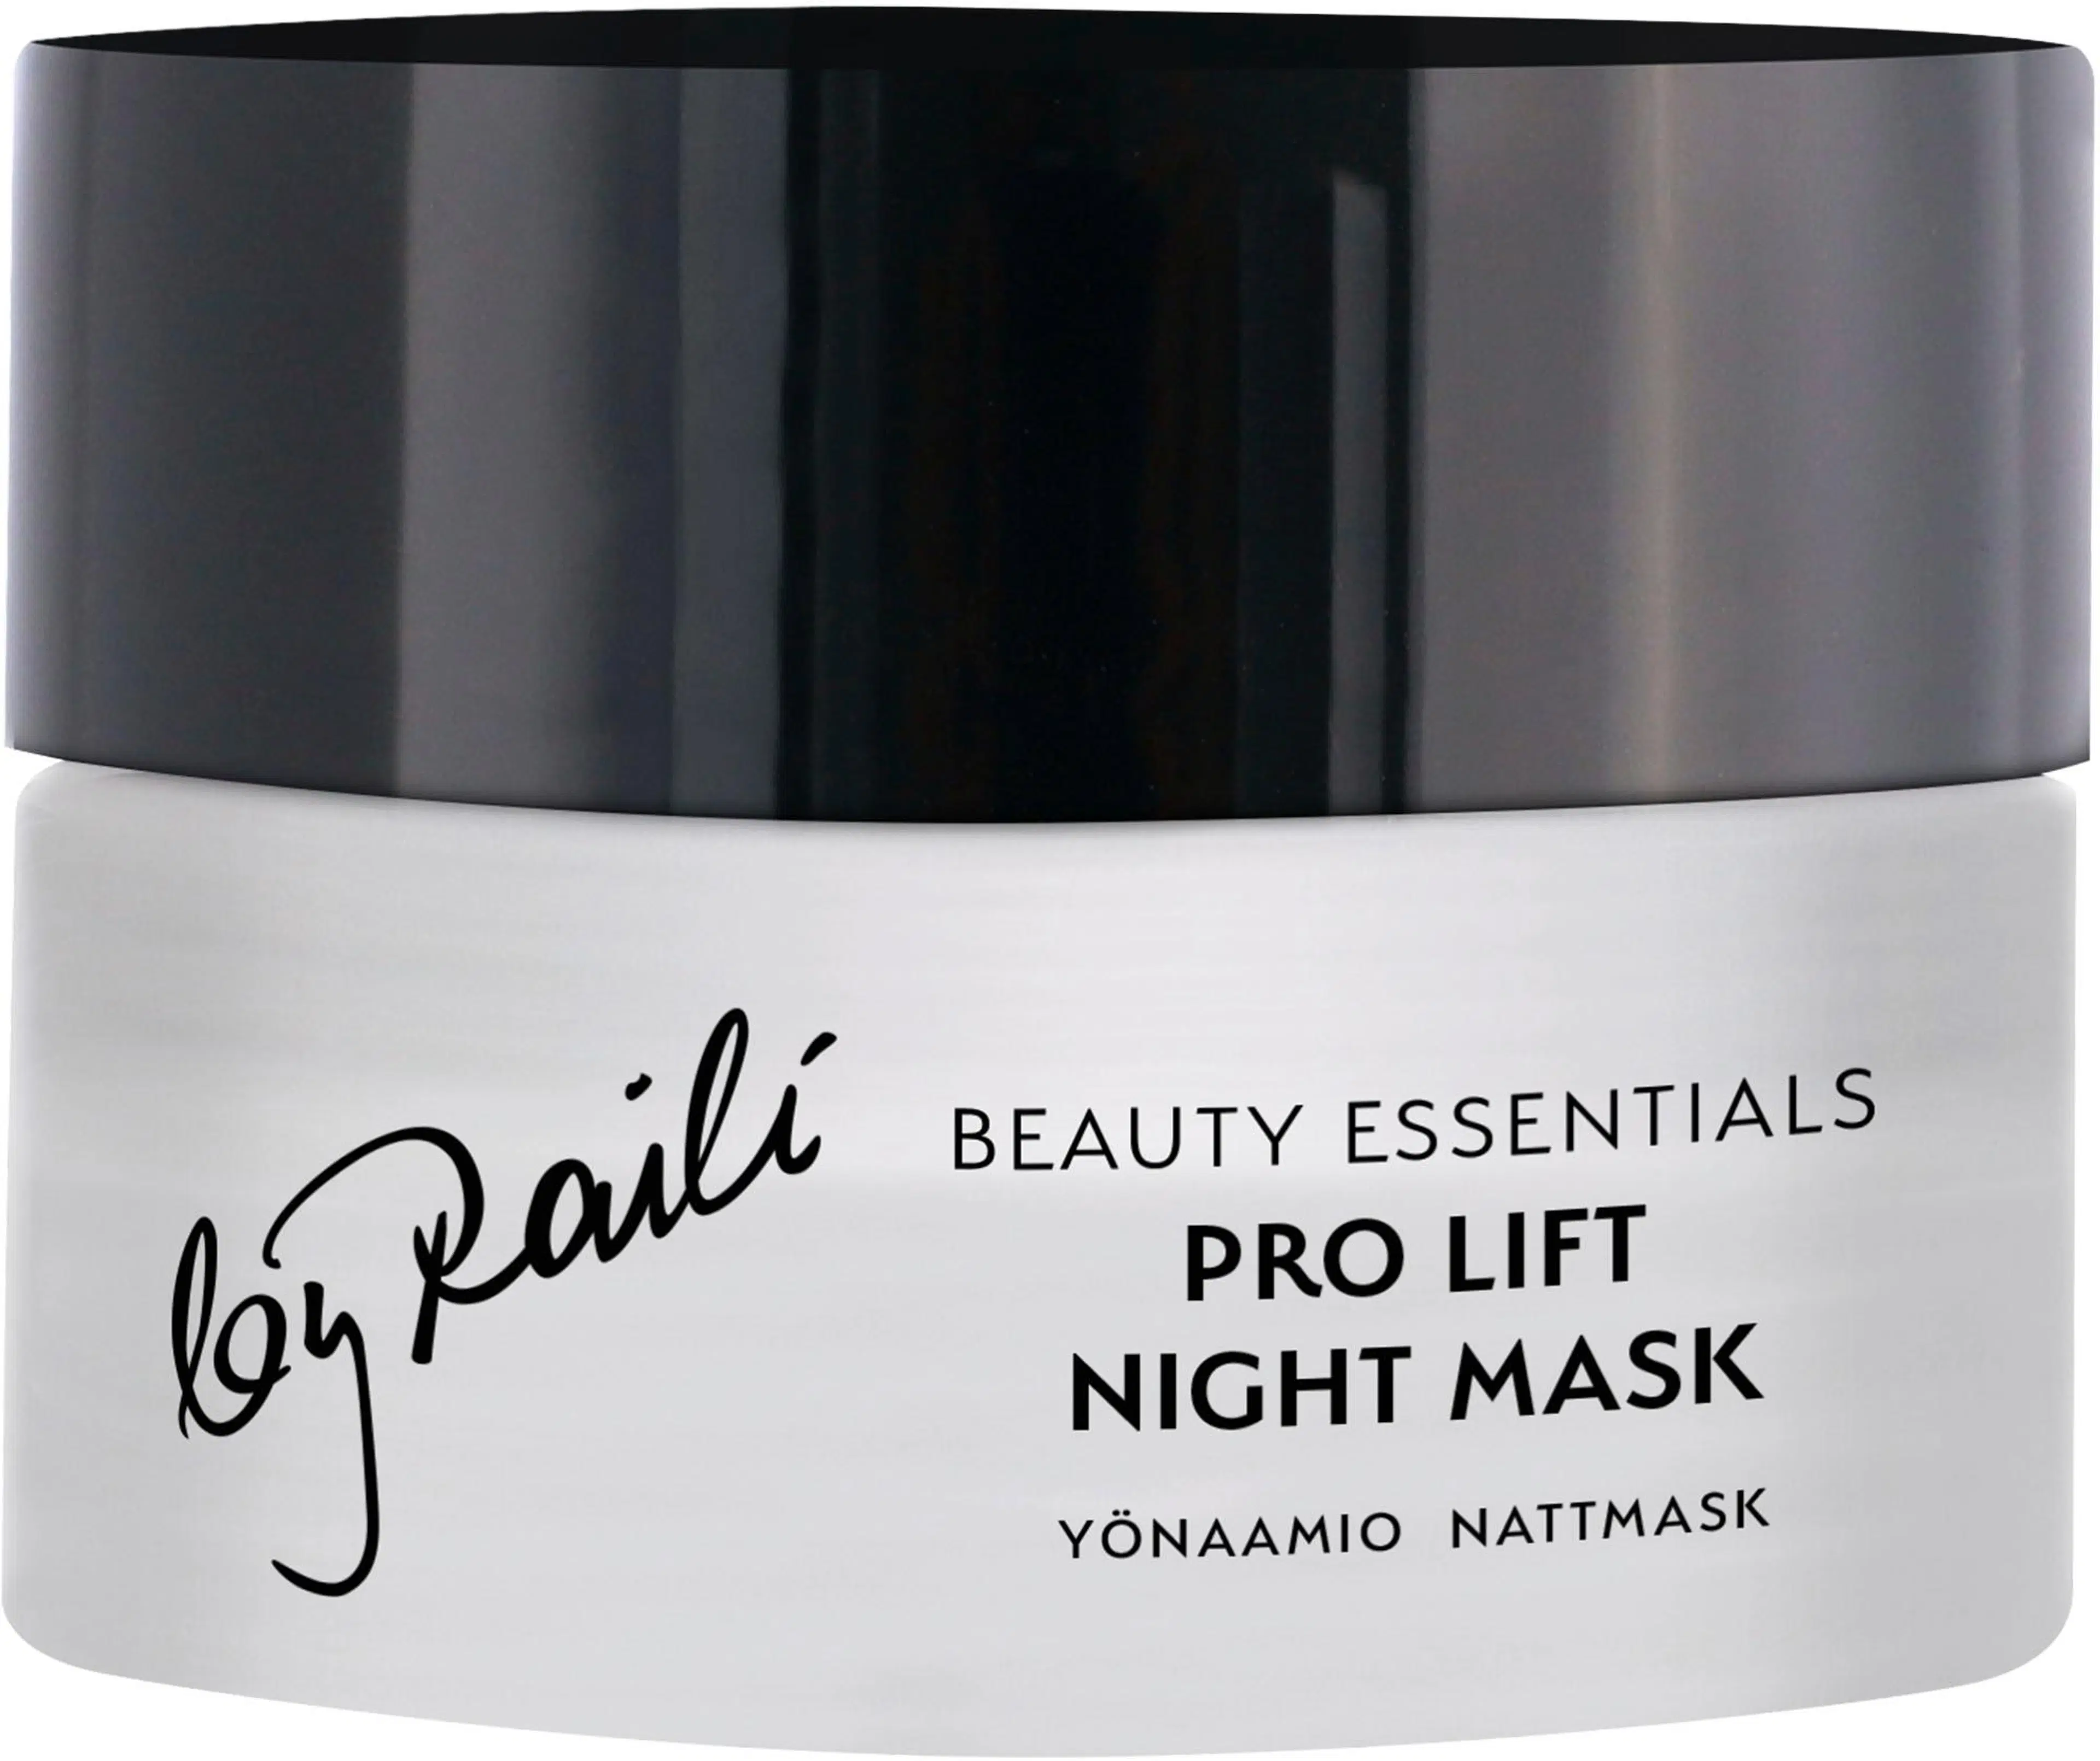 by Raili Beauty Essentials Pro Lift Night Mask yönaamio 50 ml